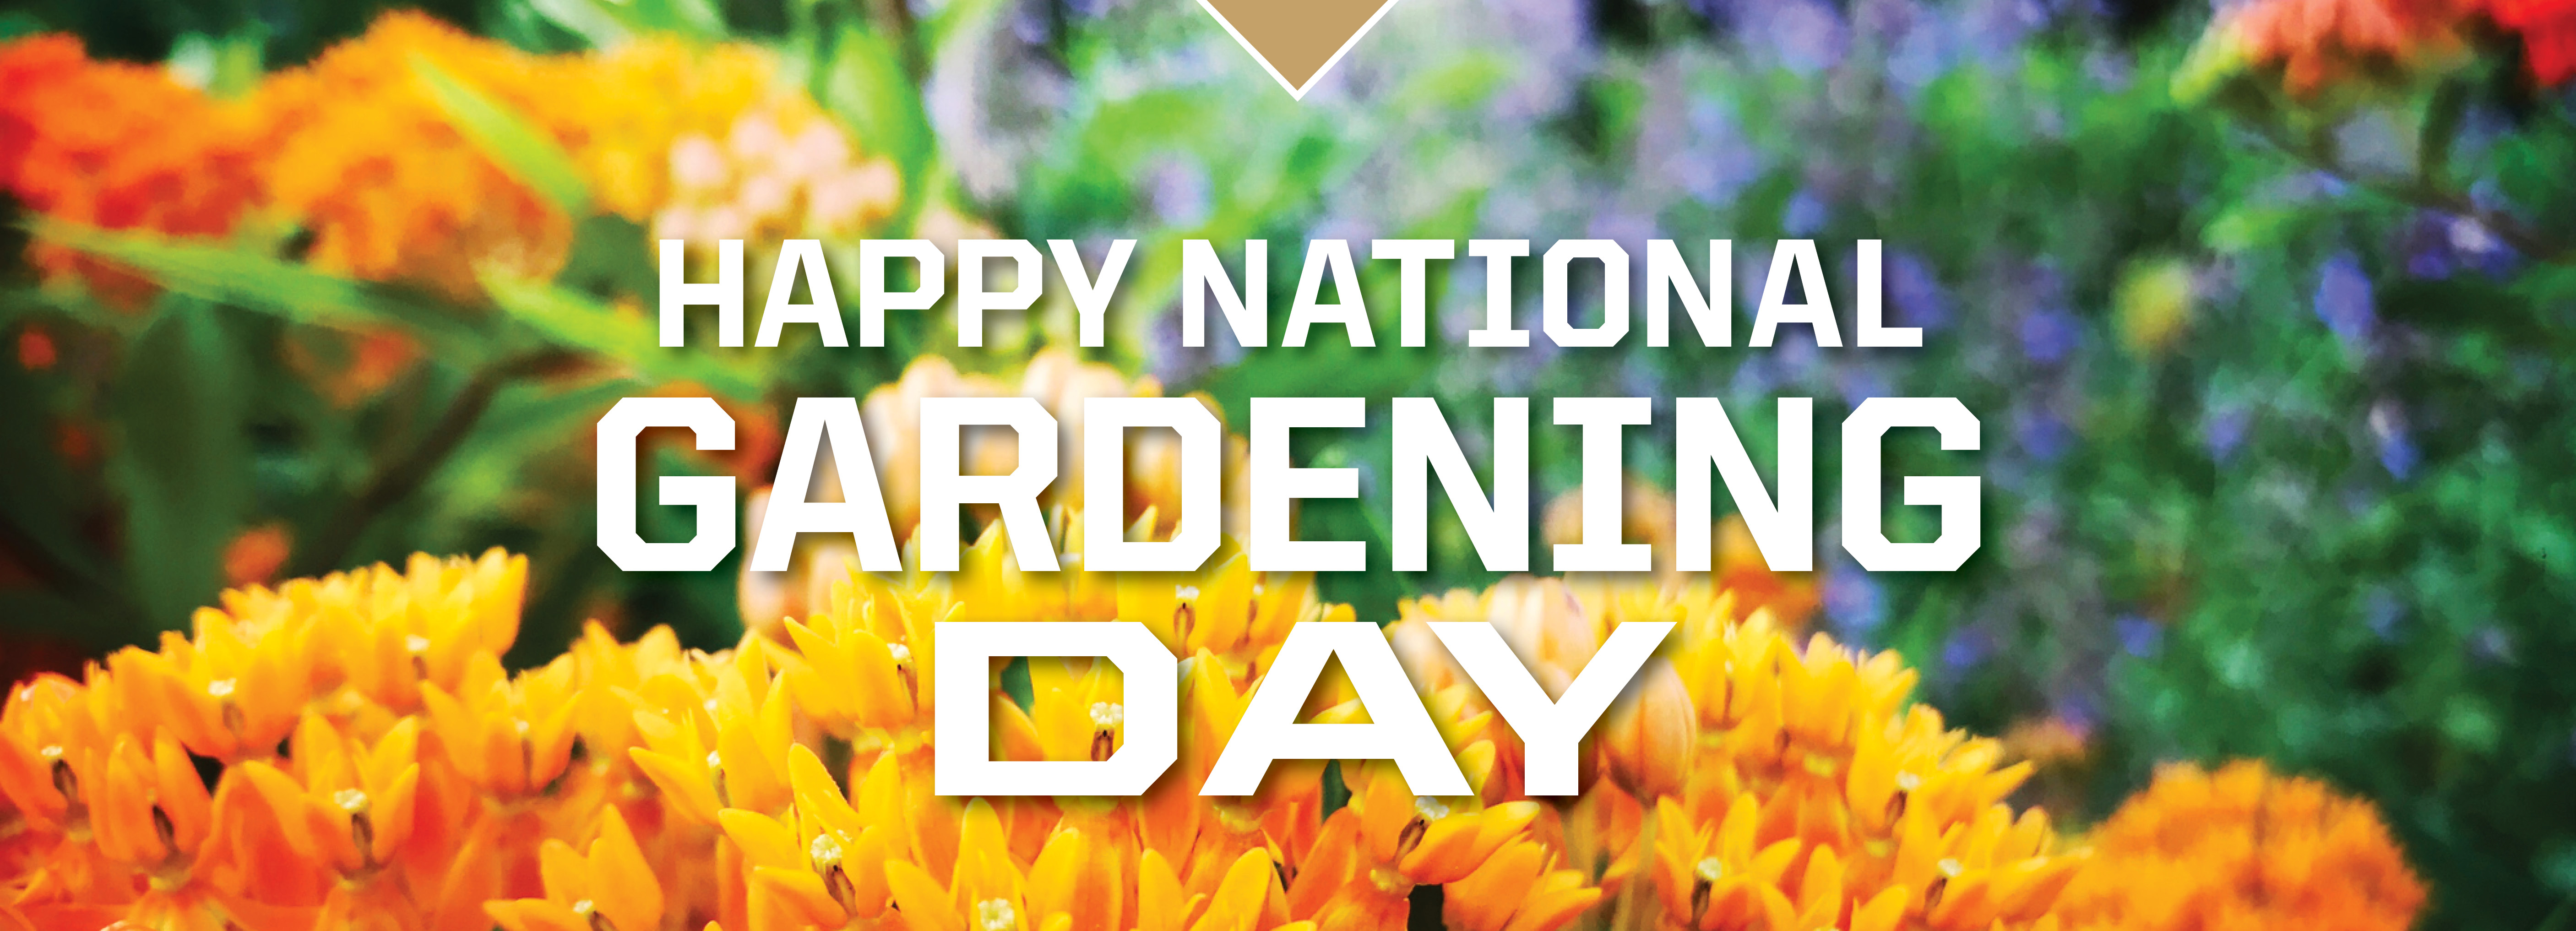 national garden day web banner